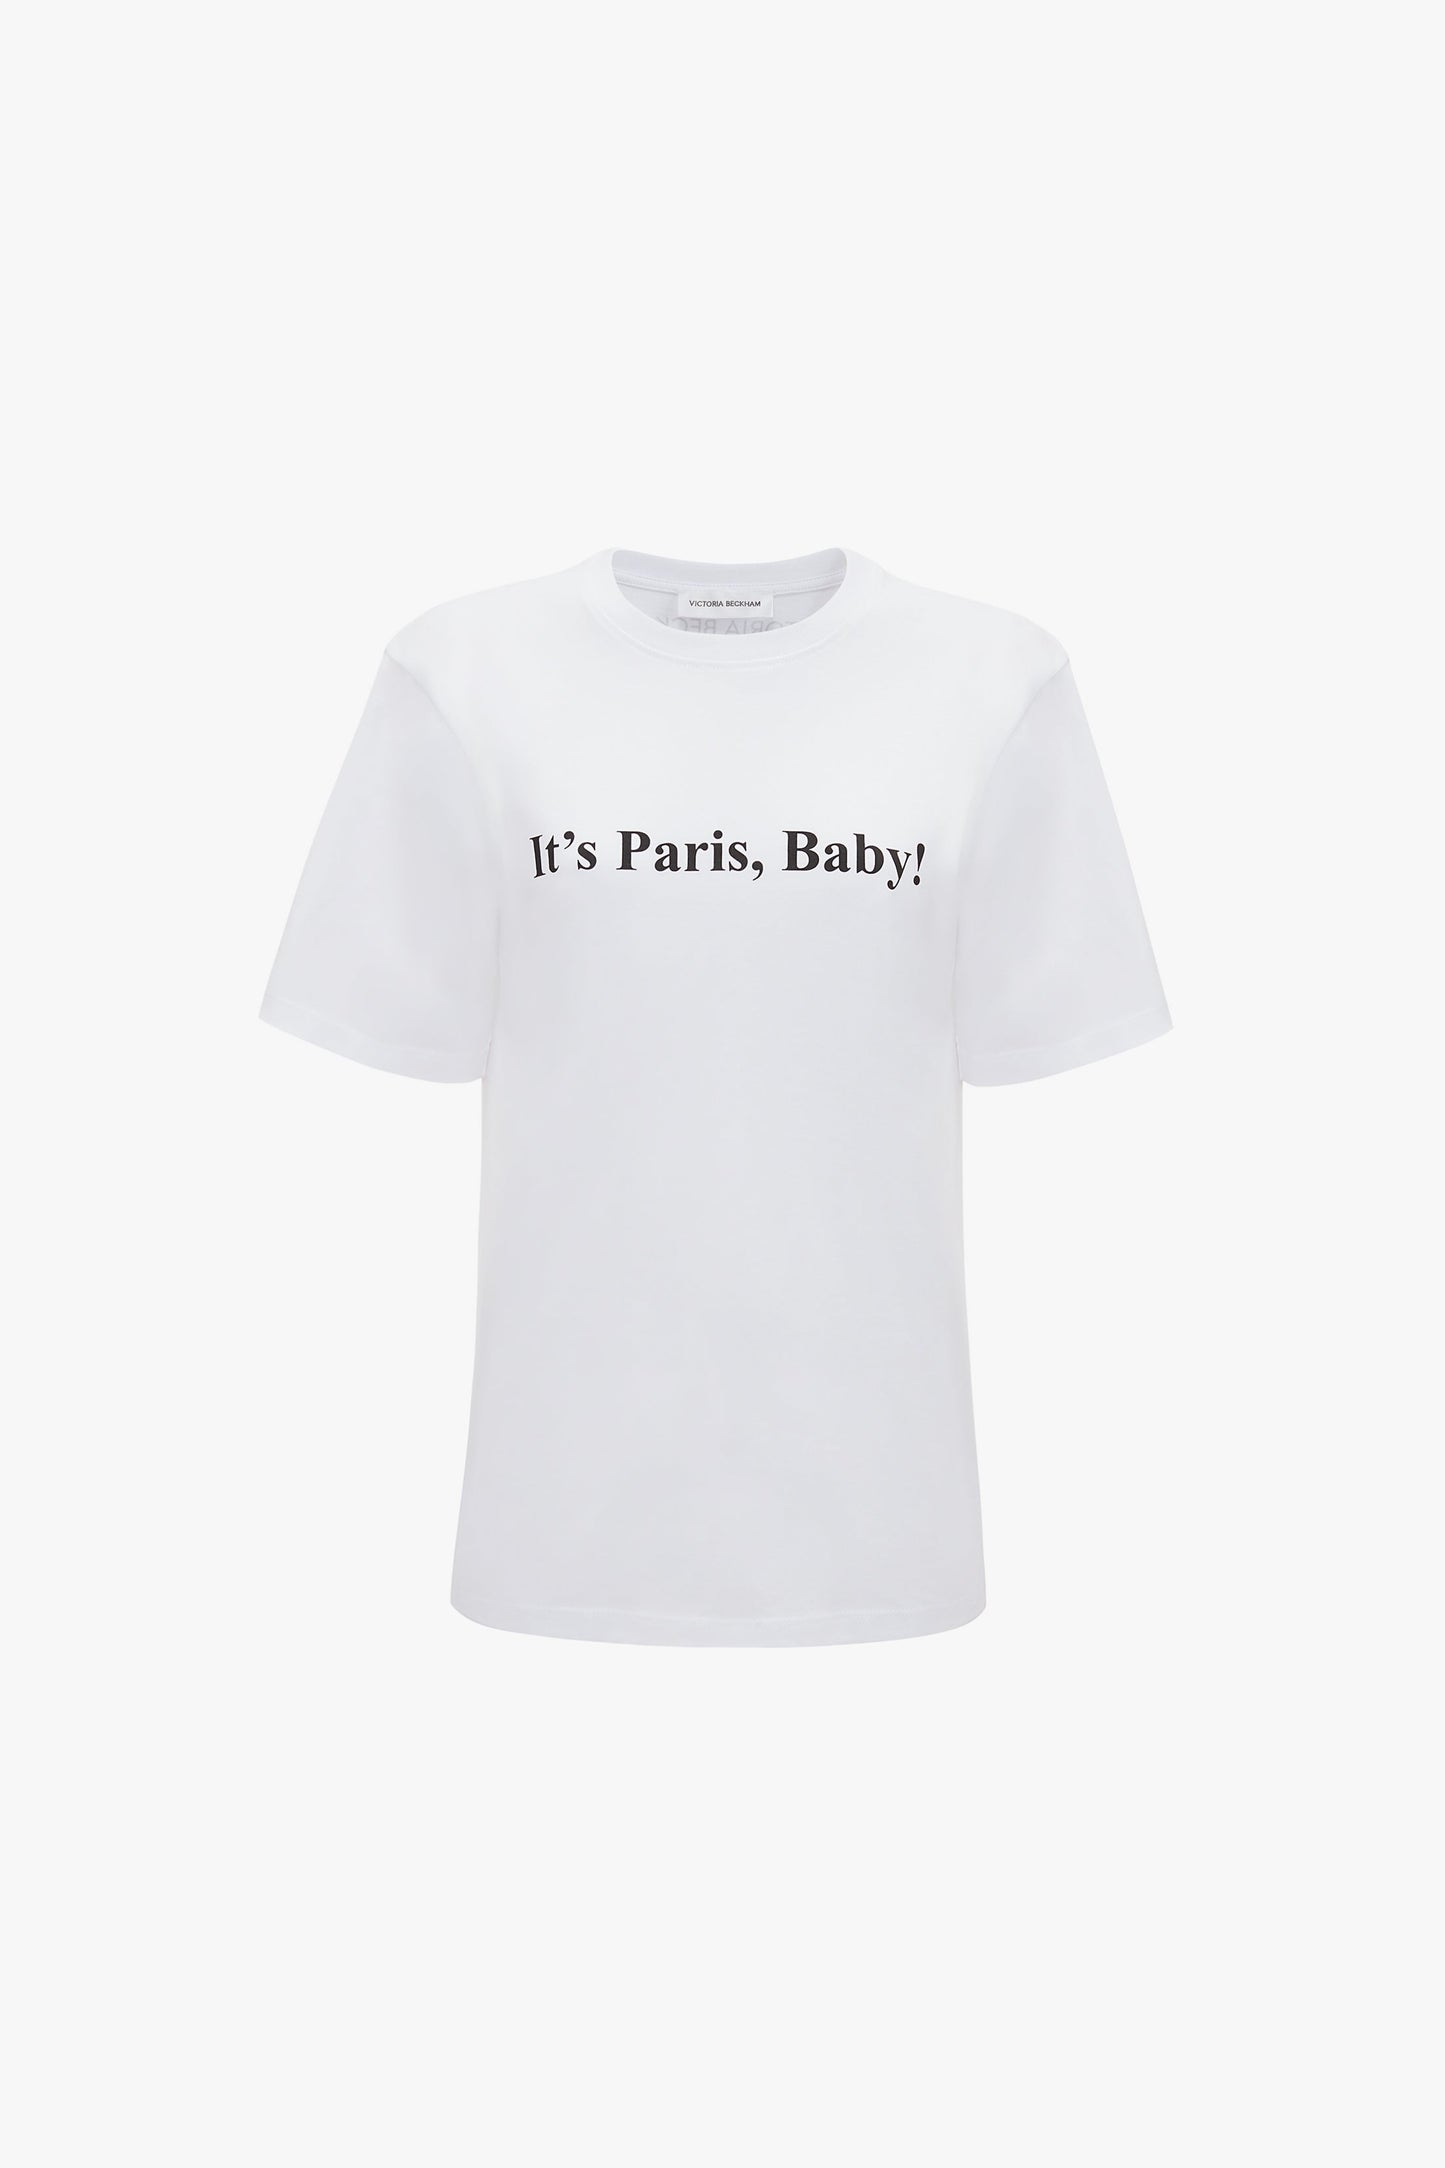 IT'S PARIS, BABY! T-shirt In white